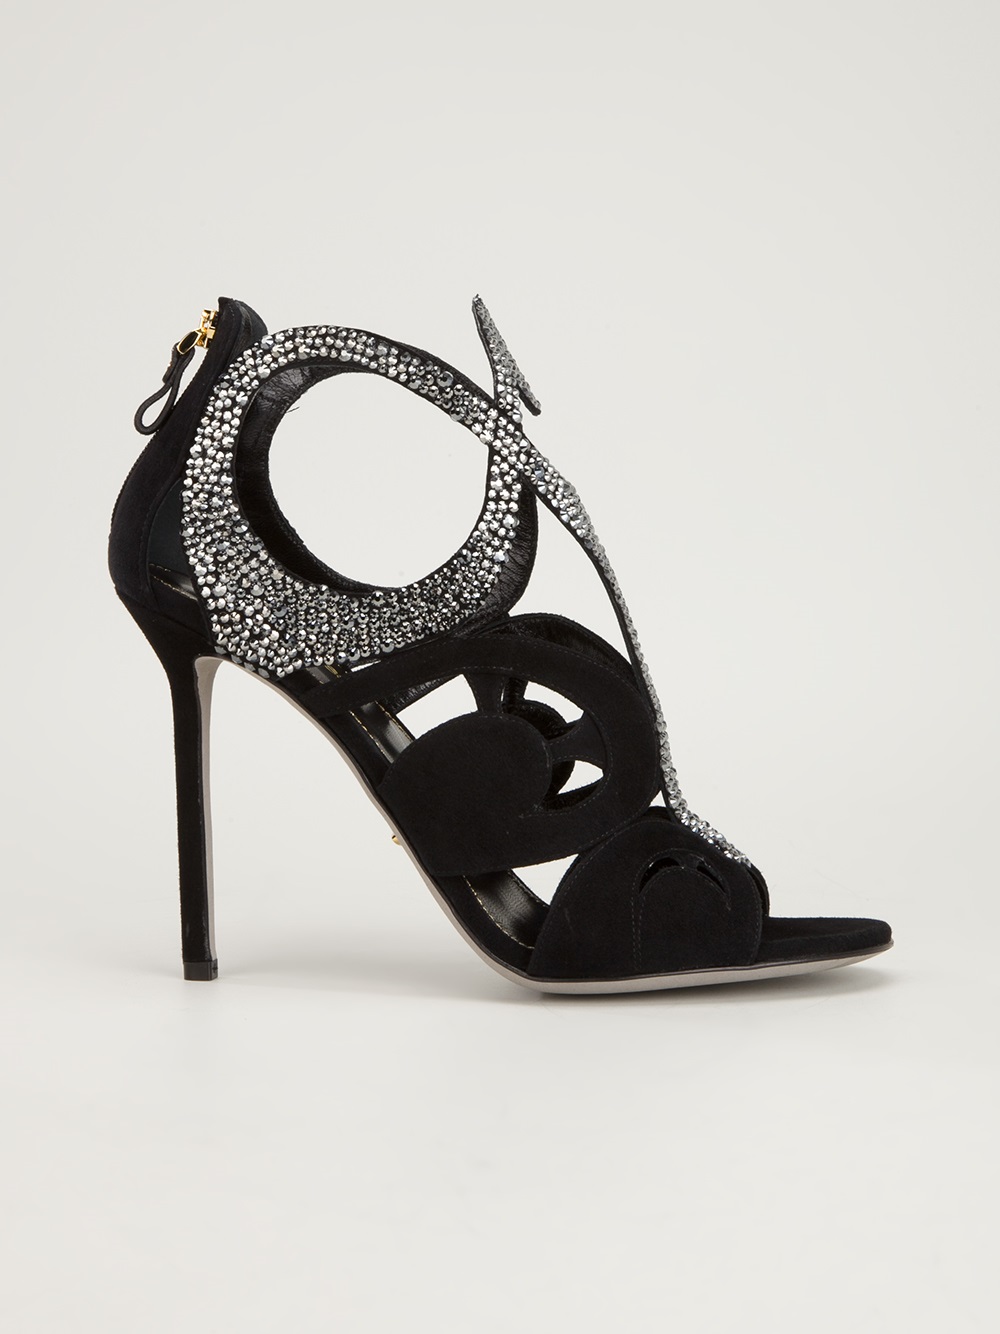 Lyst - Sergio Rossi Embellished Stiletto Sandals in Black